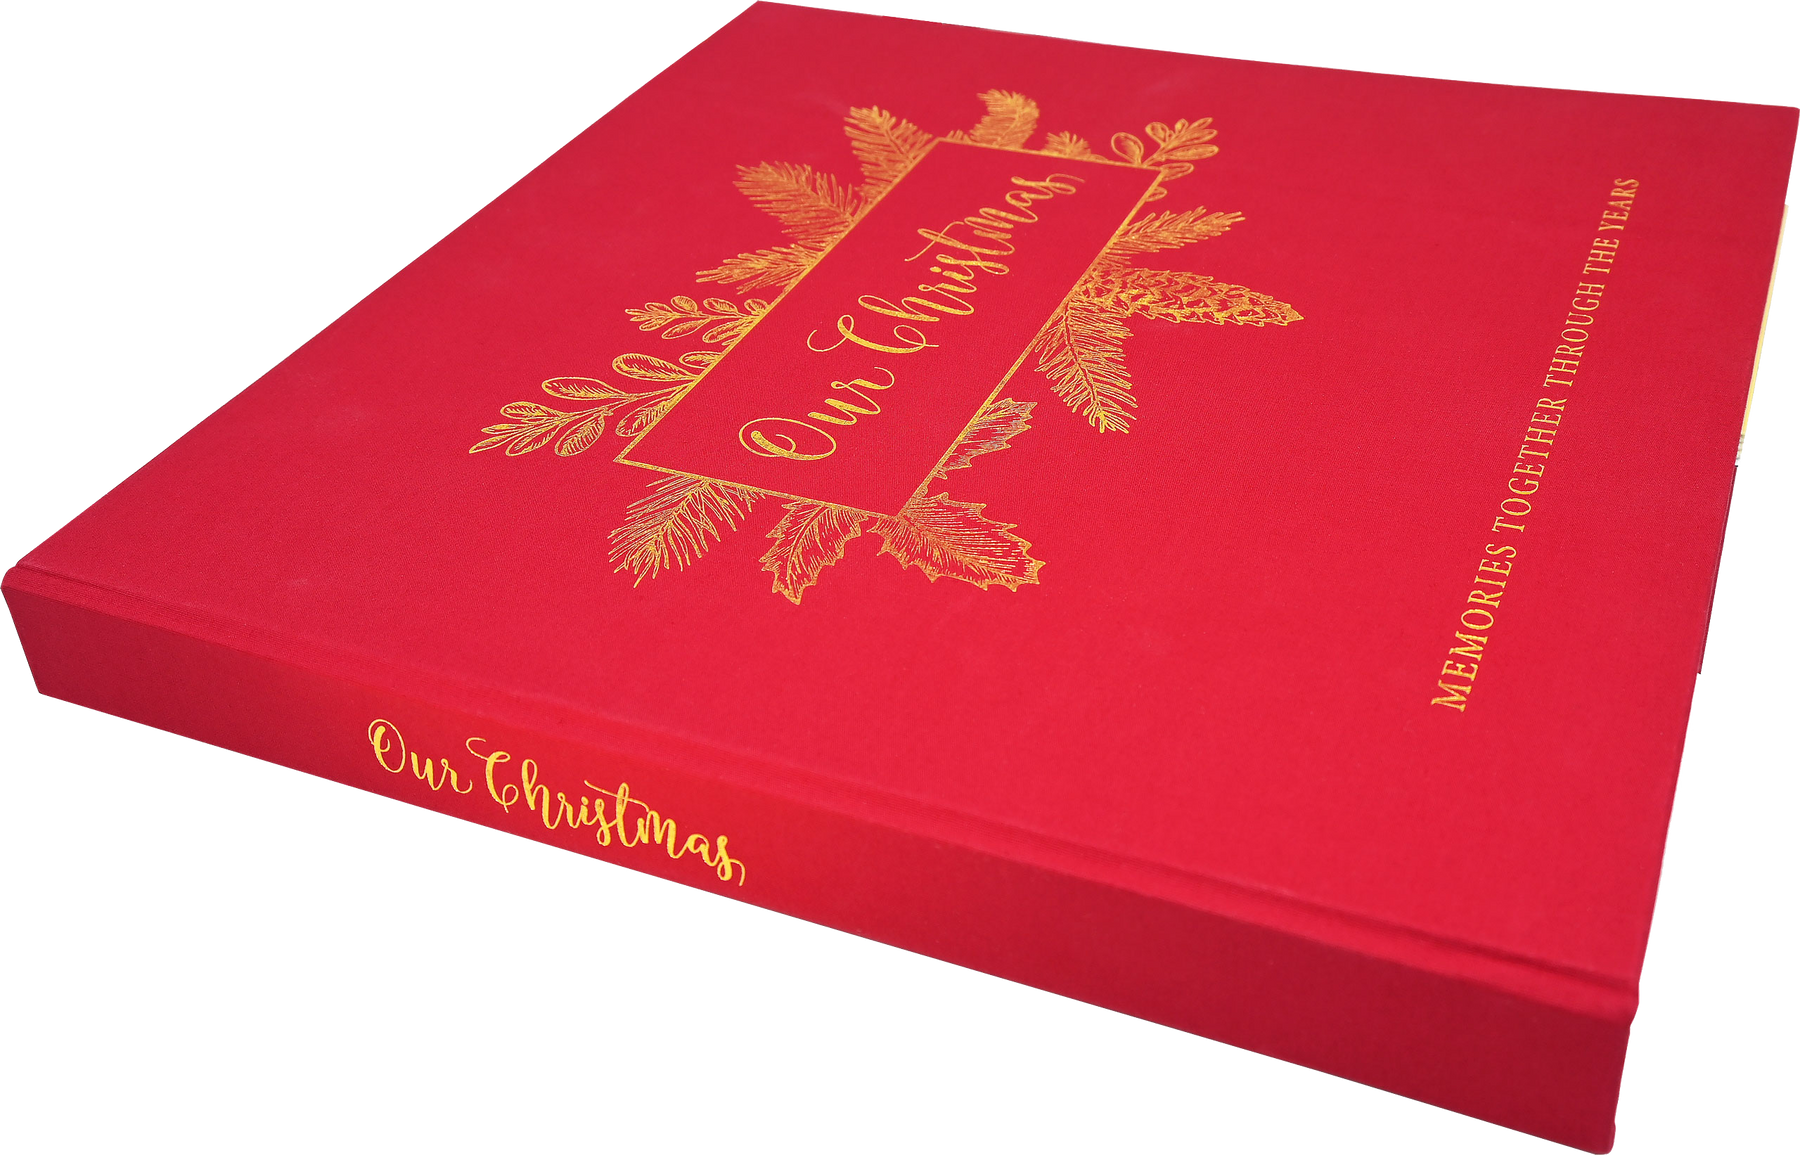 Our Christmas Memories Book [Book]